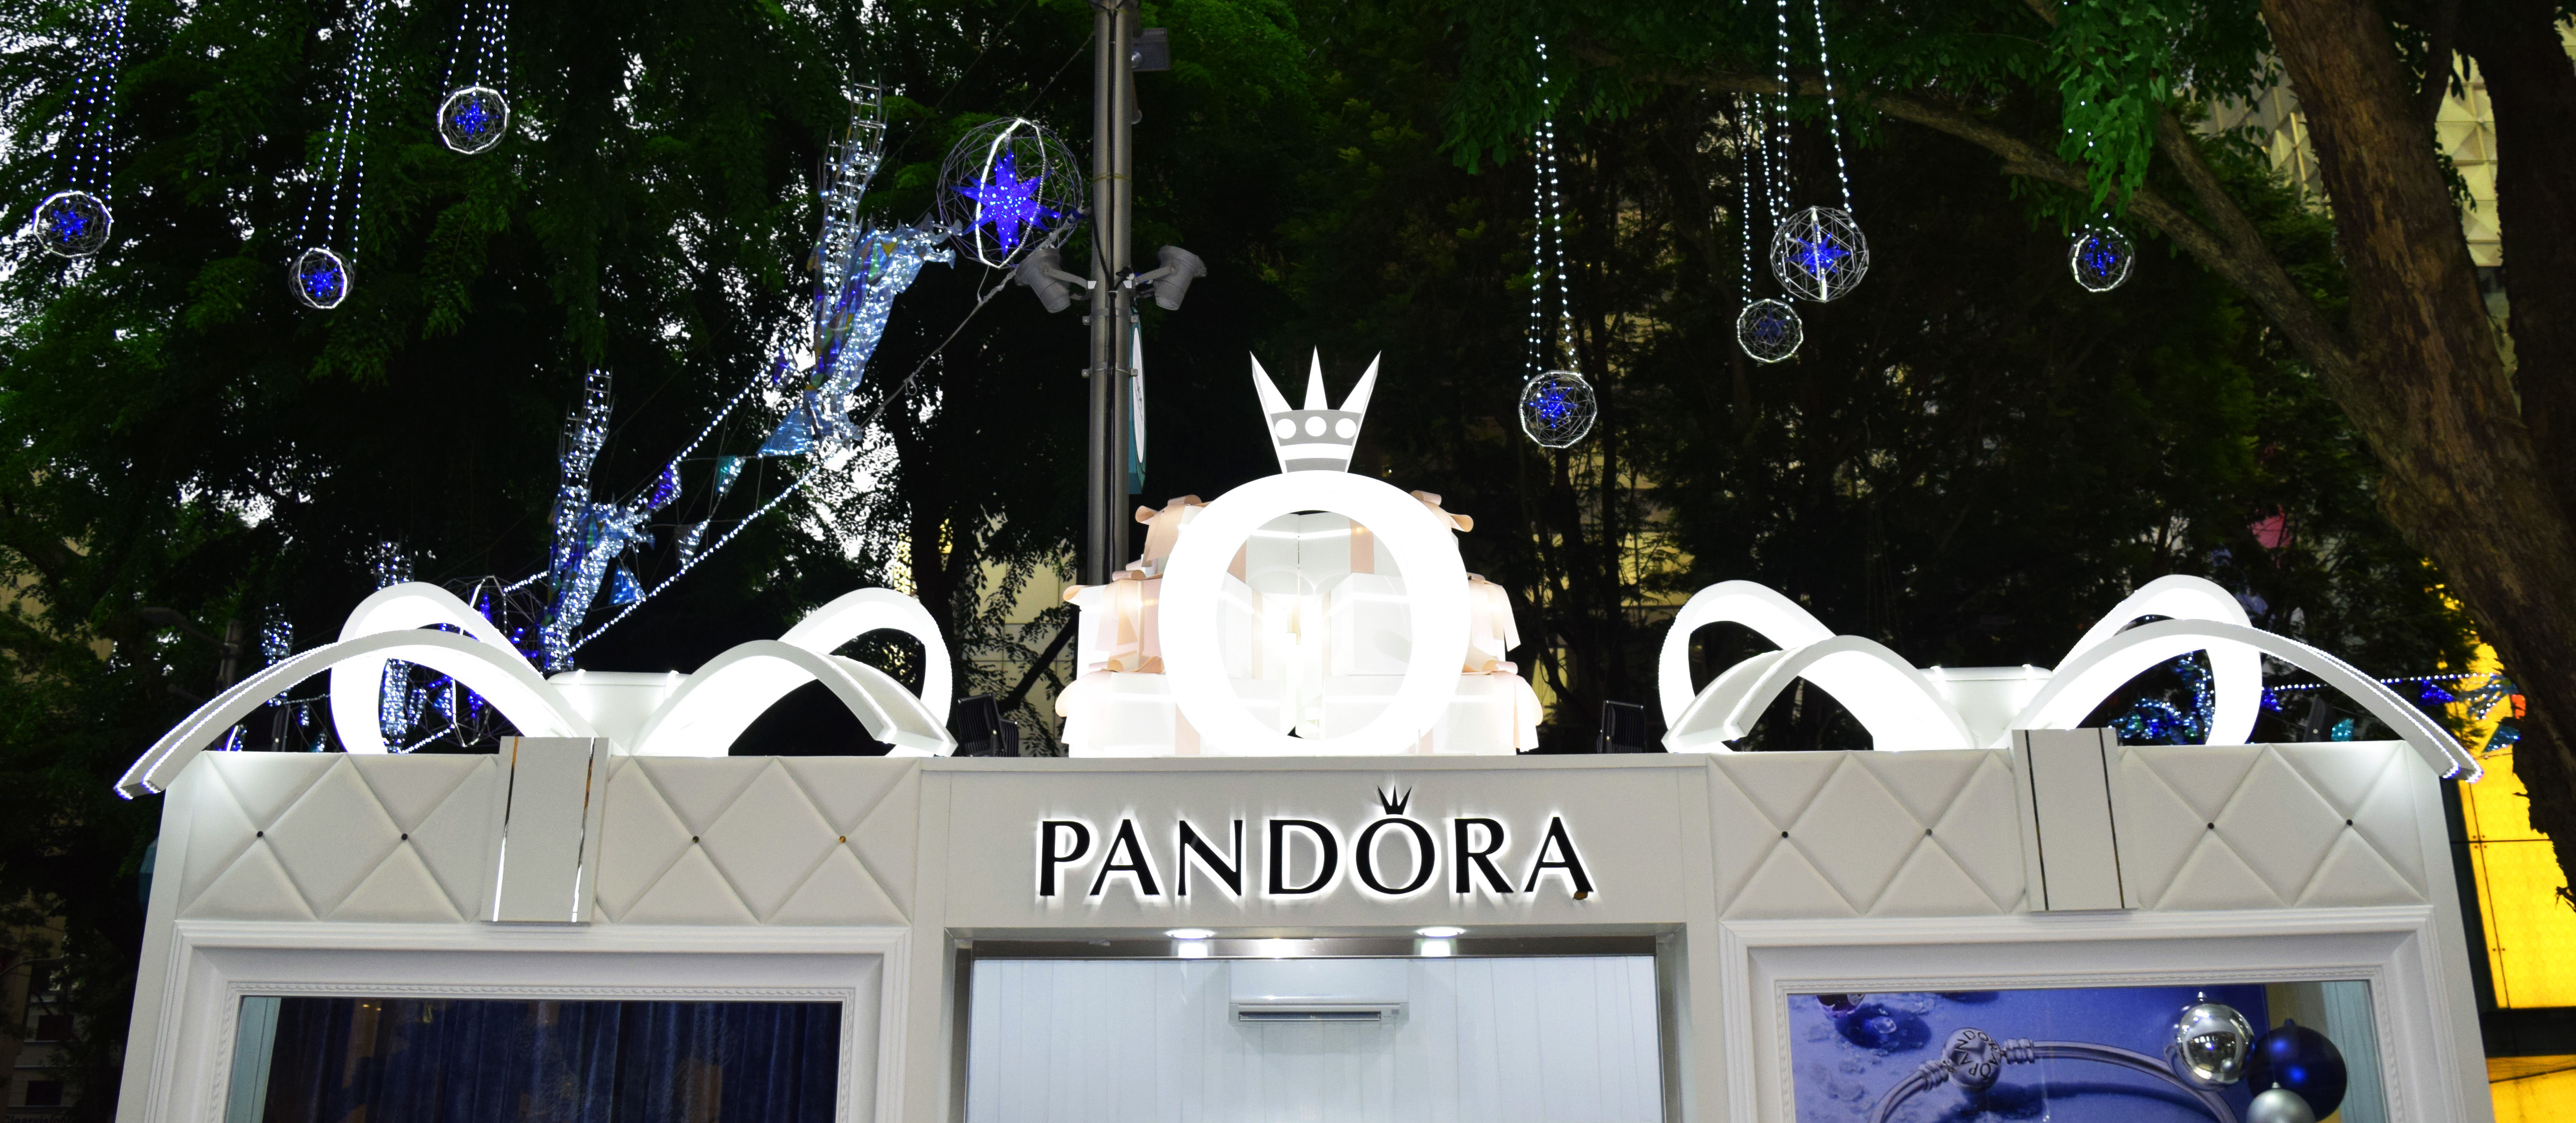 5 reasons to visit PANDORA’s pop-up store